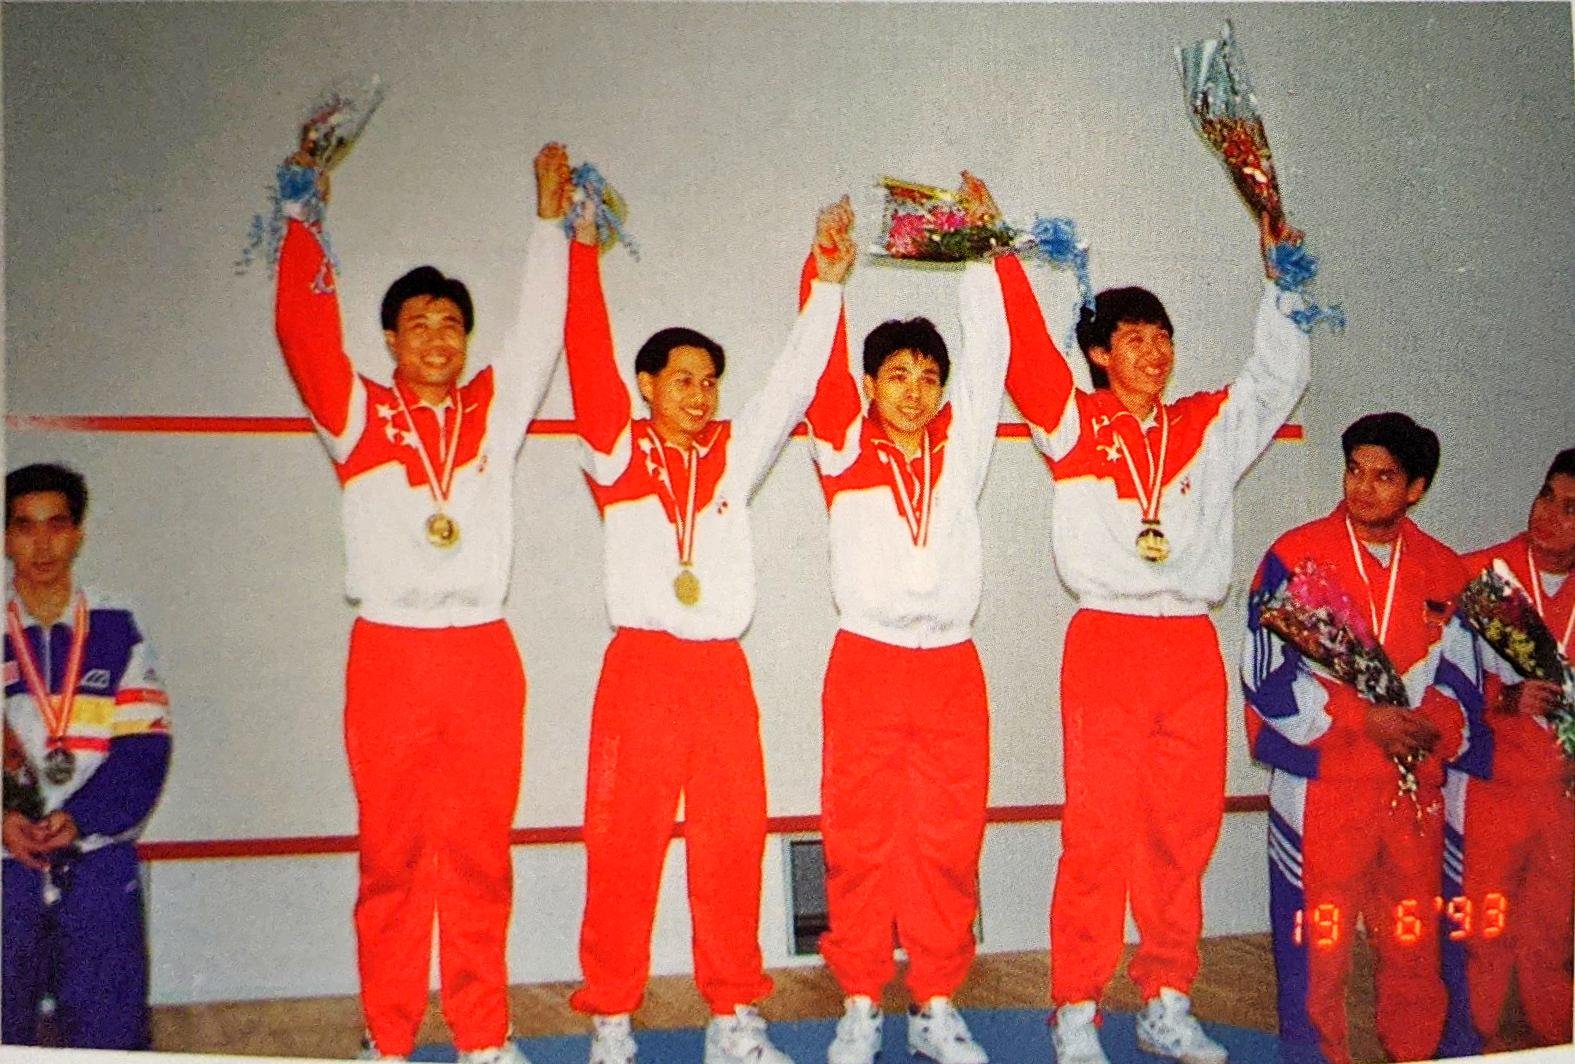 1993, sea games Zainal Abidin, Simon Yang, Anthony Chua and Peter hill